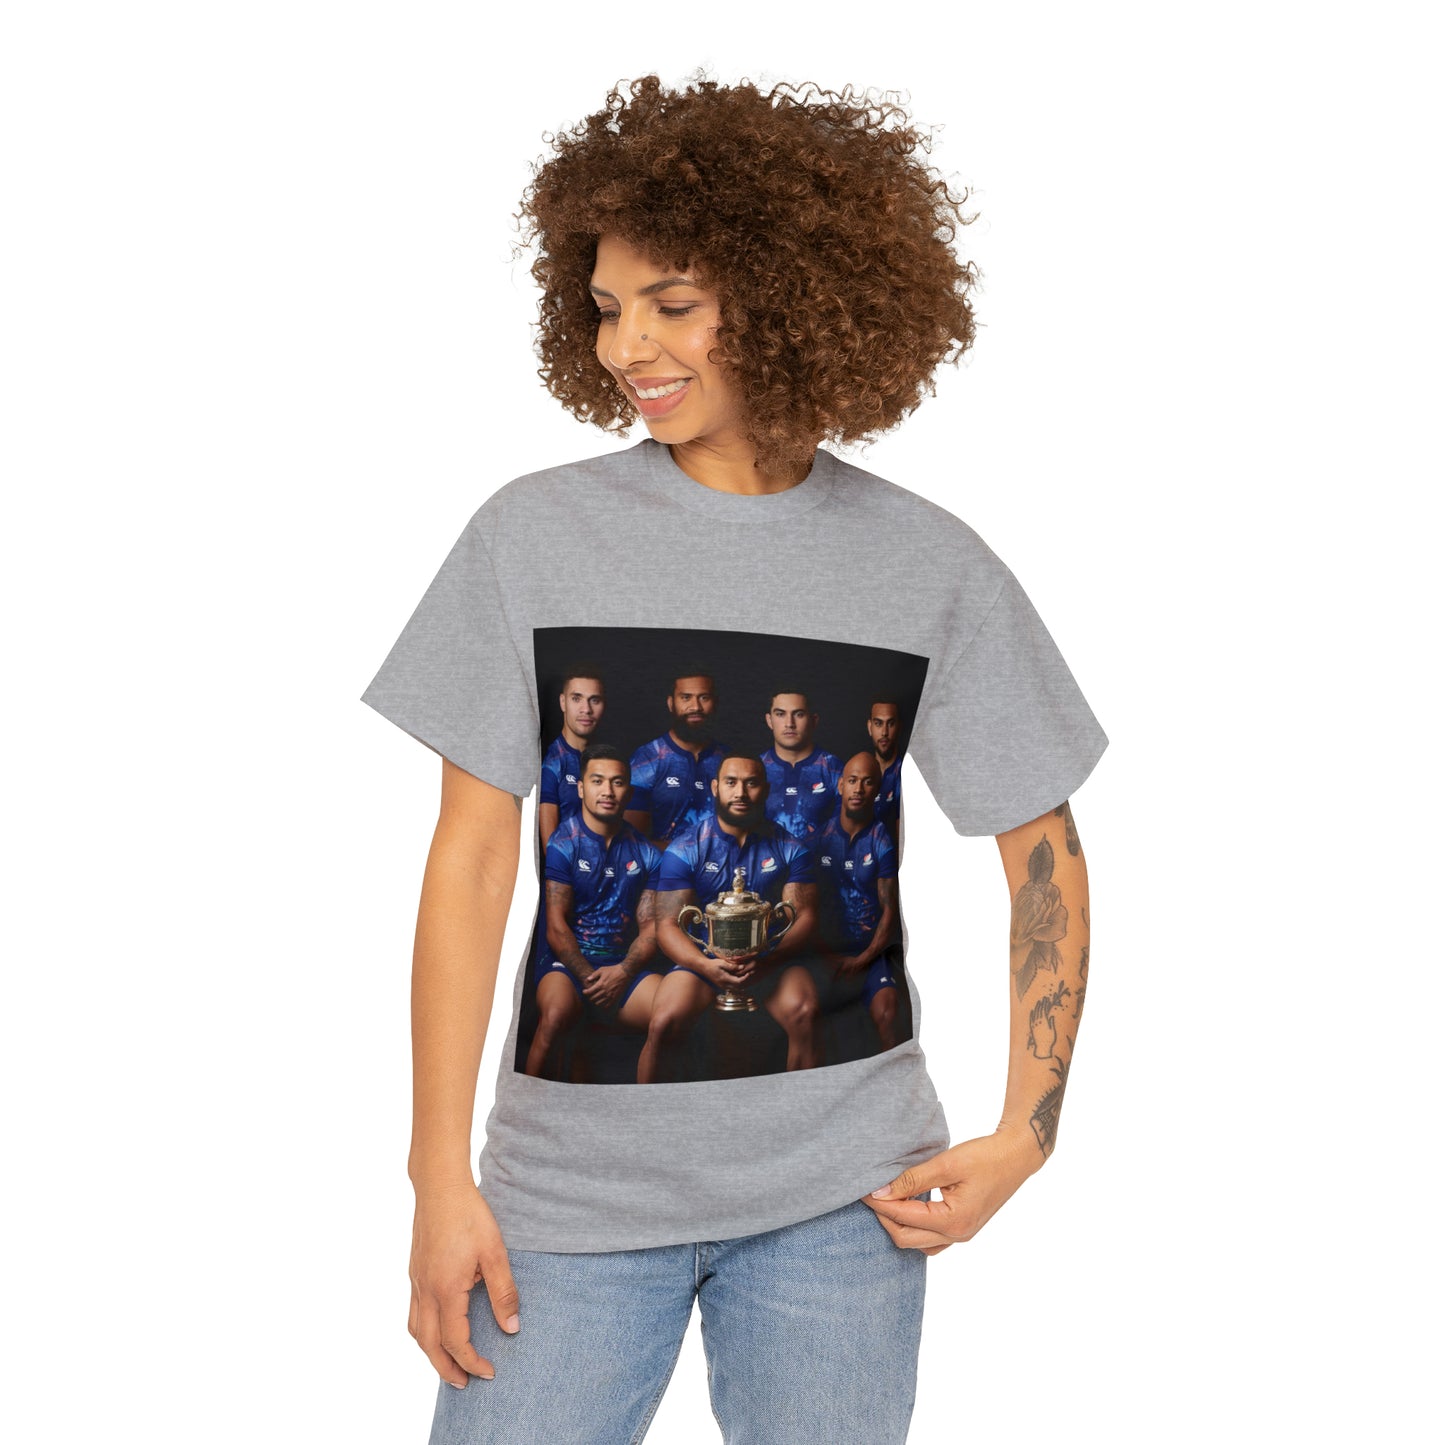 Samoa RWC Photoshoot - light shirts